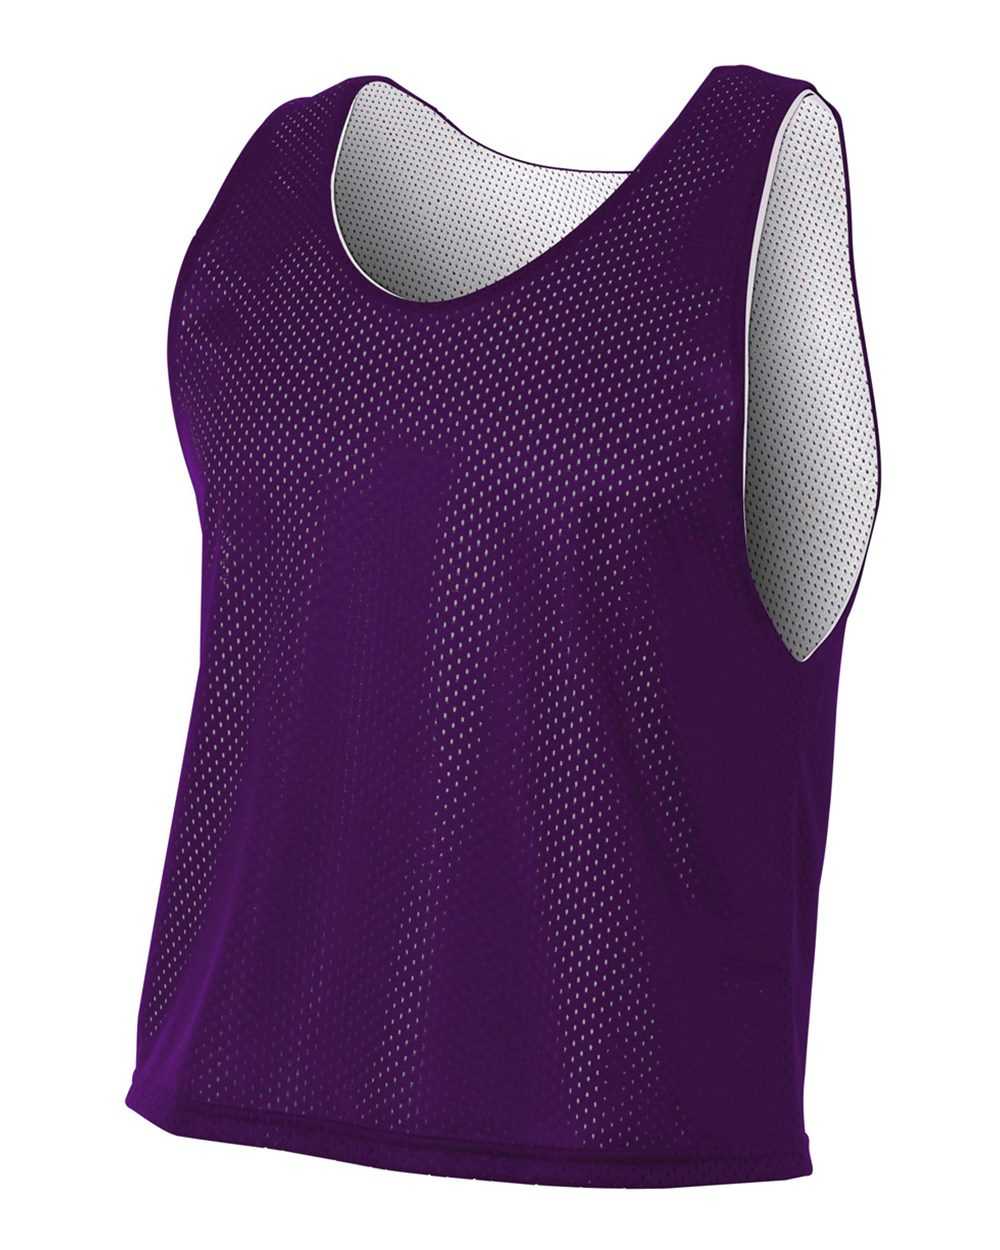 A4 N2274 Lacrosse Reversible Practice Jersey - Purple White - HIT a Double